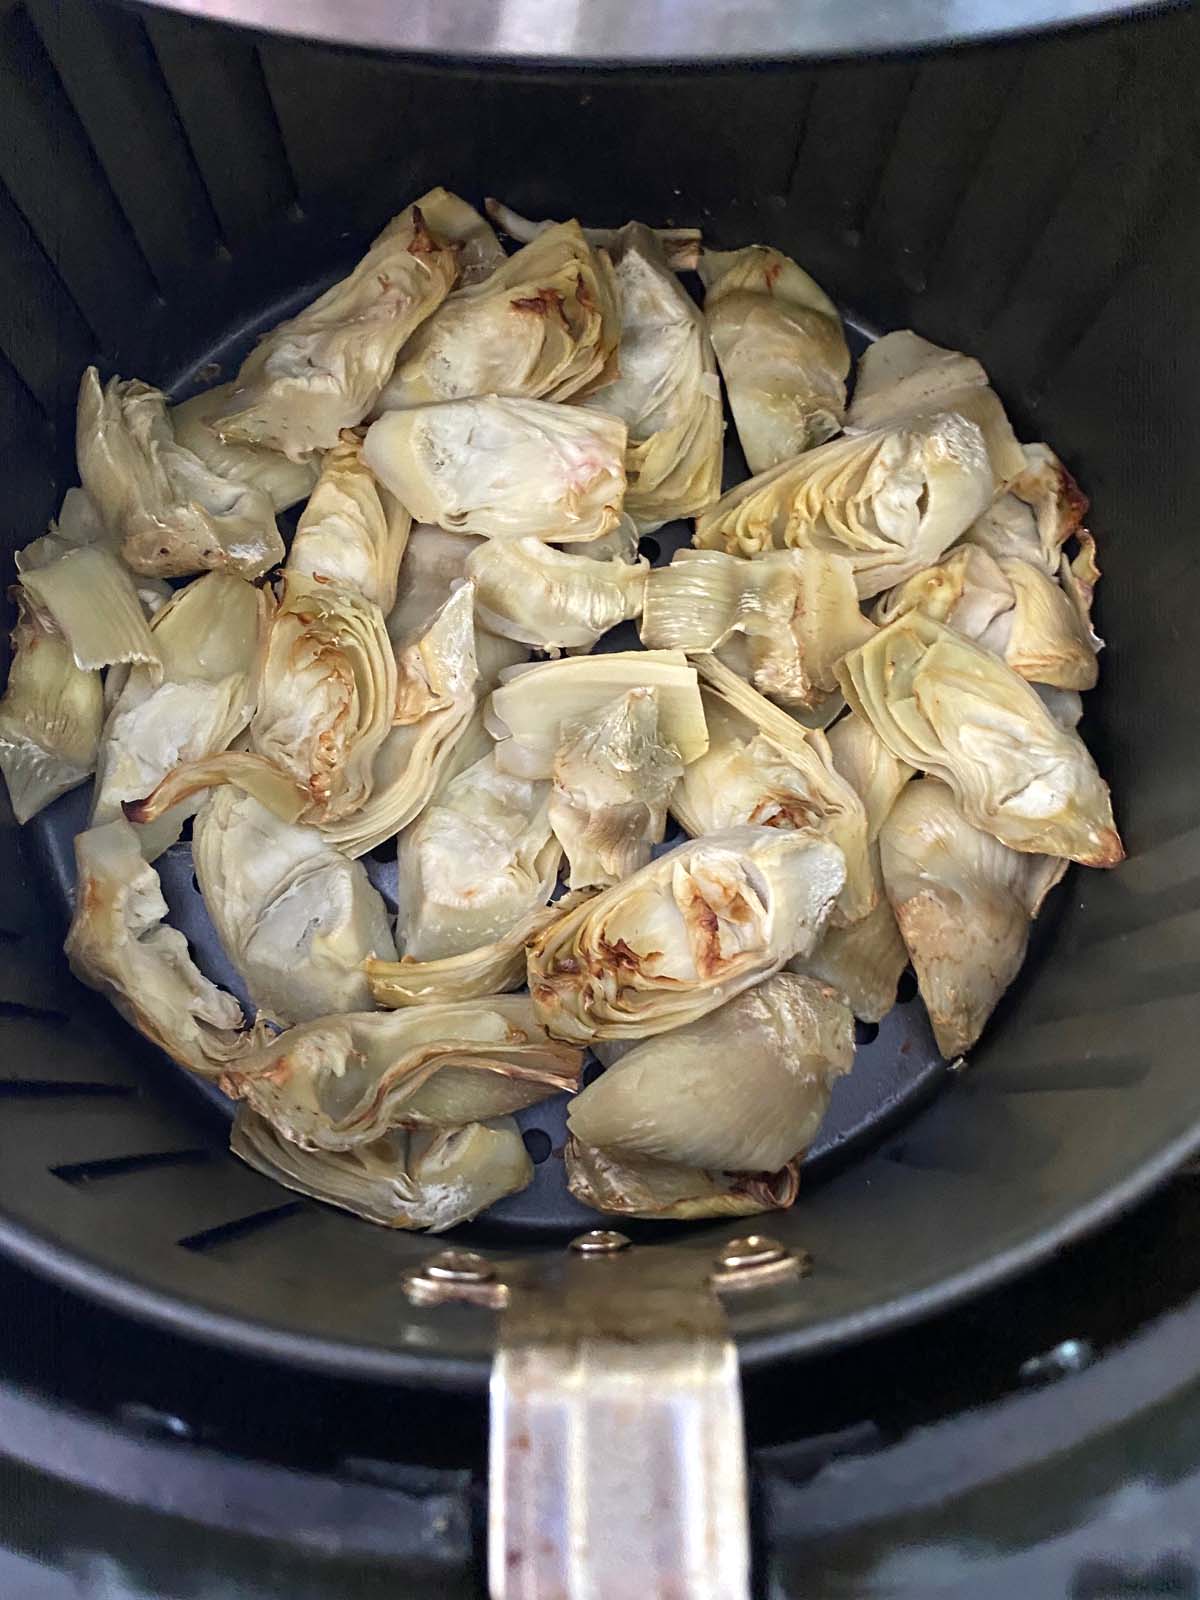 Cooked artichoke hearts in an air fryer.